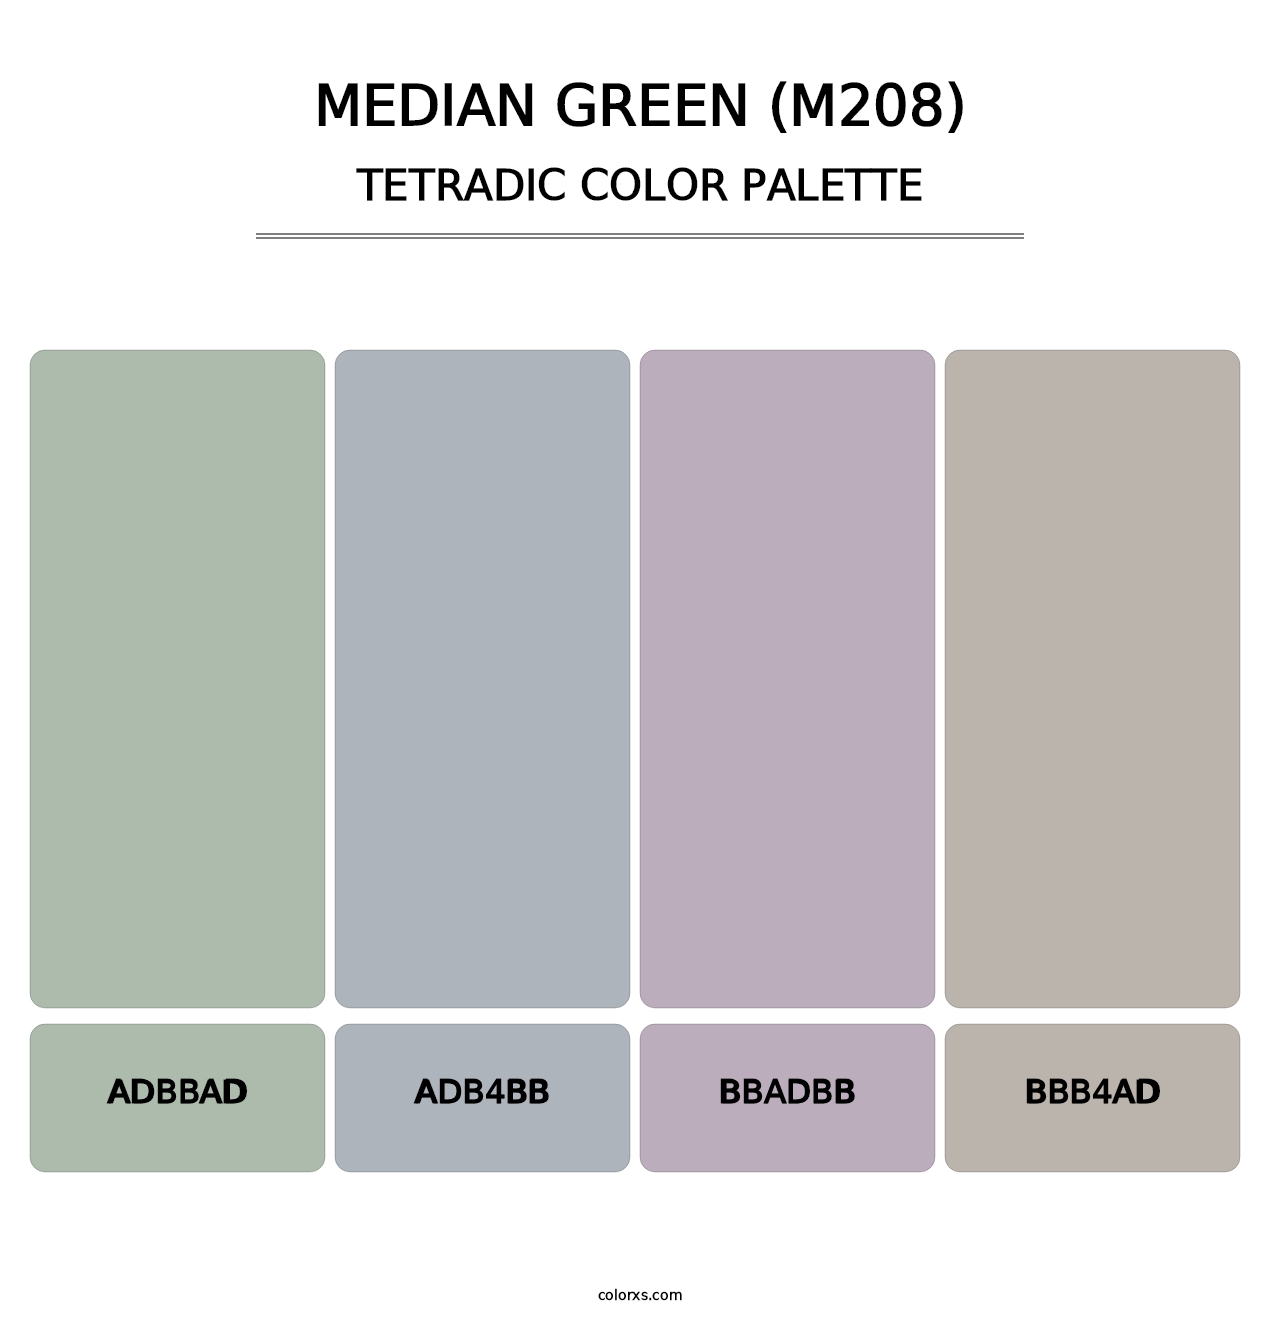 Median Green (M208) - Tetradic Color Palette